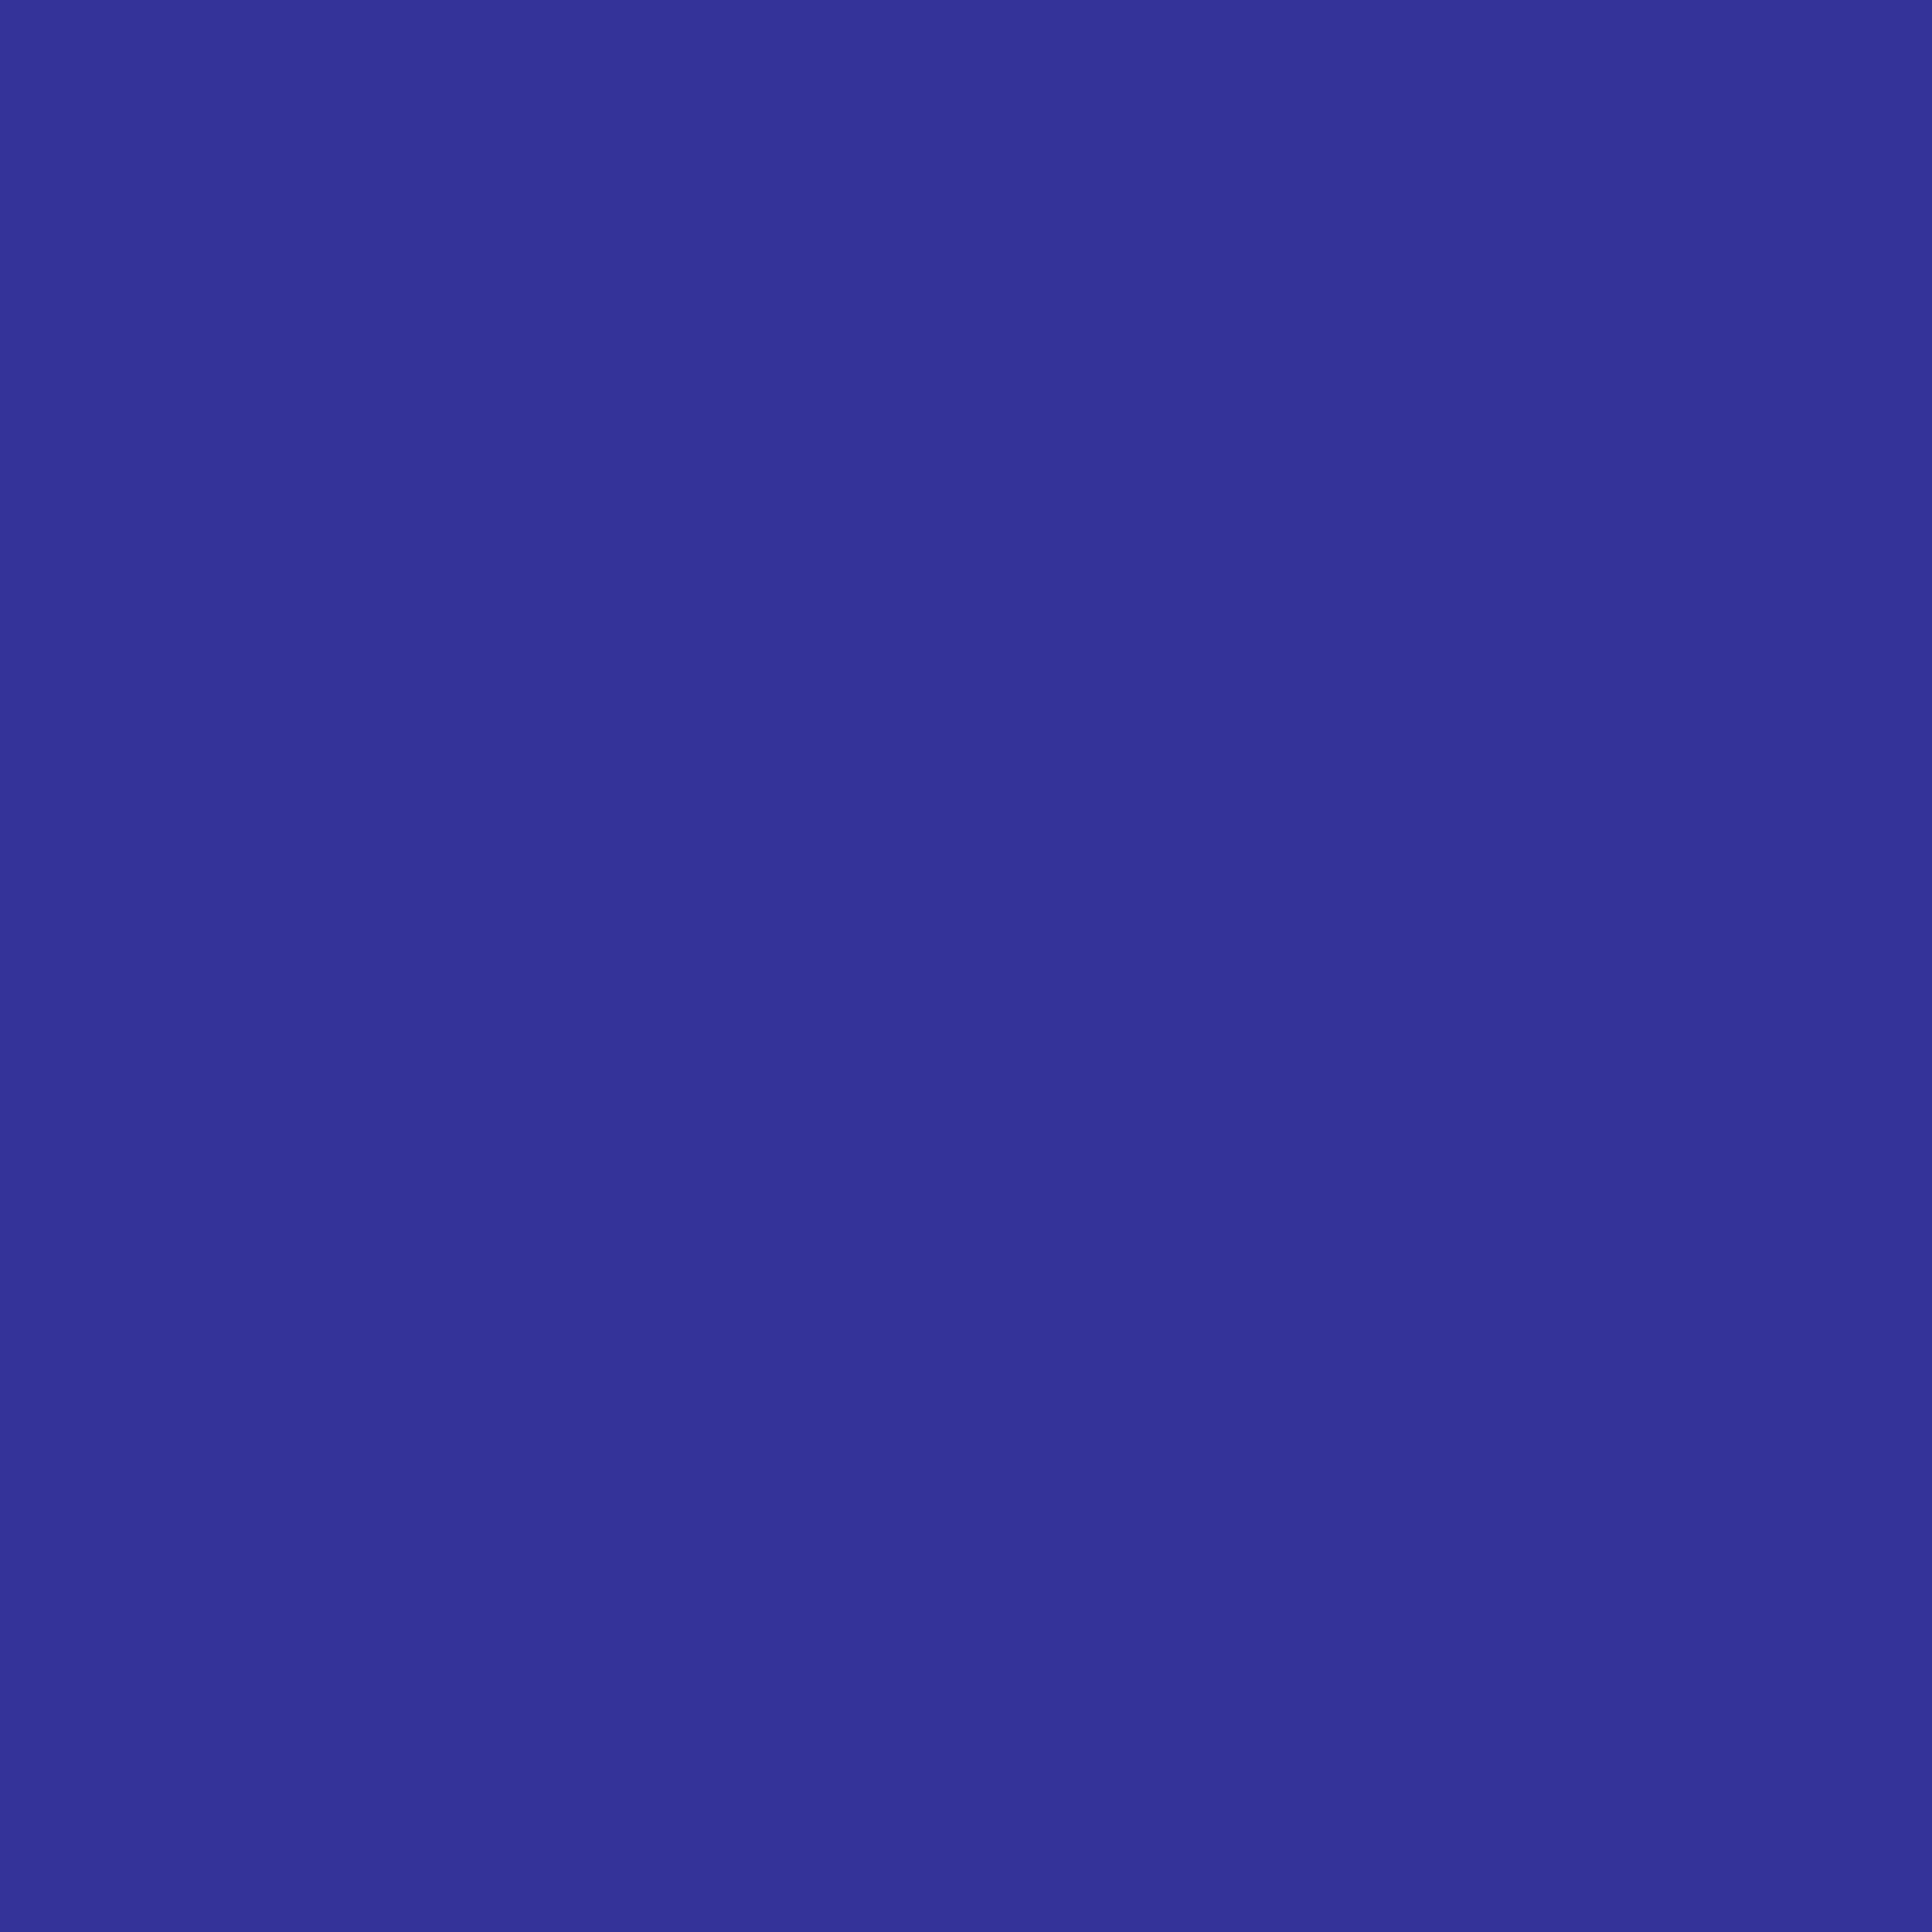 2048x2048 Blue Pigment Solid Color Background